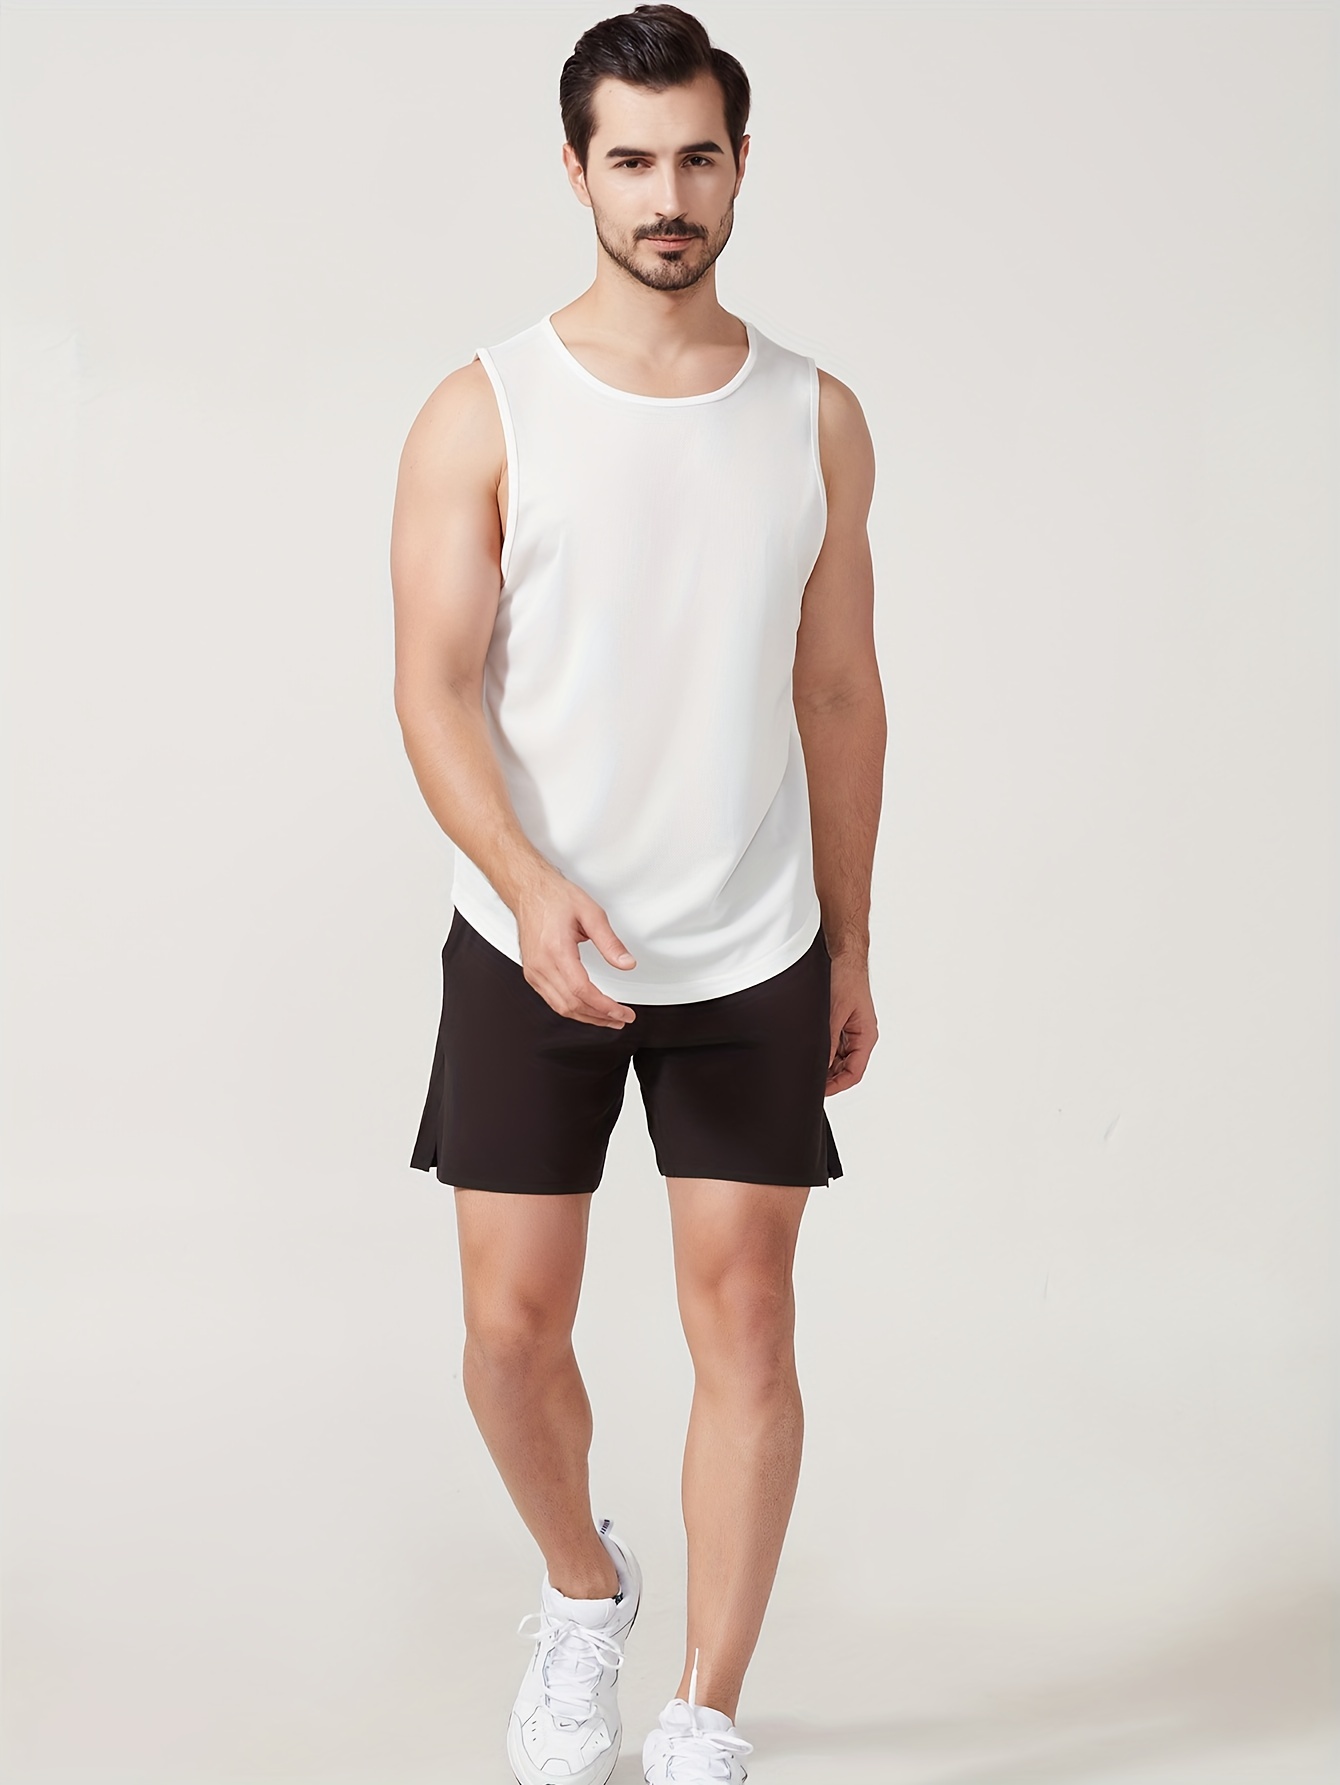 Men's Airism Cotton Sleeveless T-Shirt with Quick-Drying, White, Medium